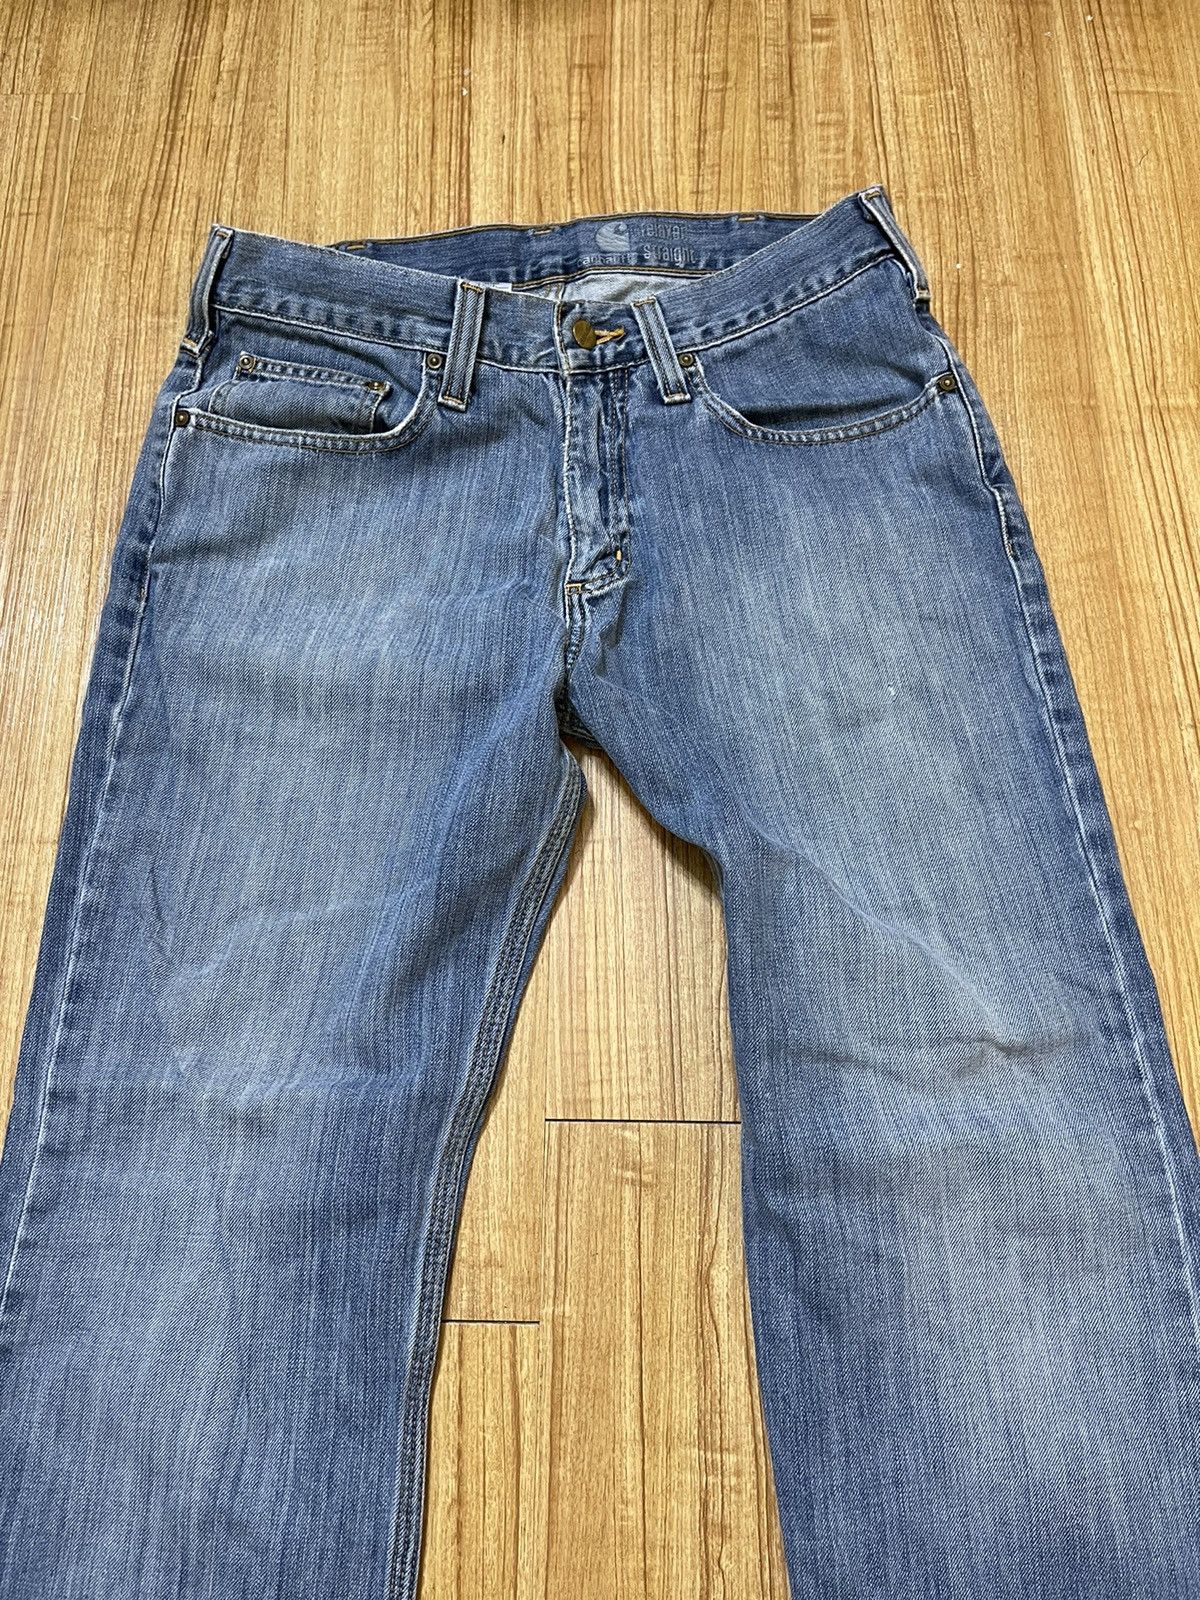 Carhartt Blue Carhartt jean pants Size US 32 / EU 48 - 3 Thumbnail